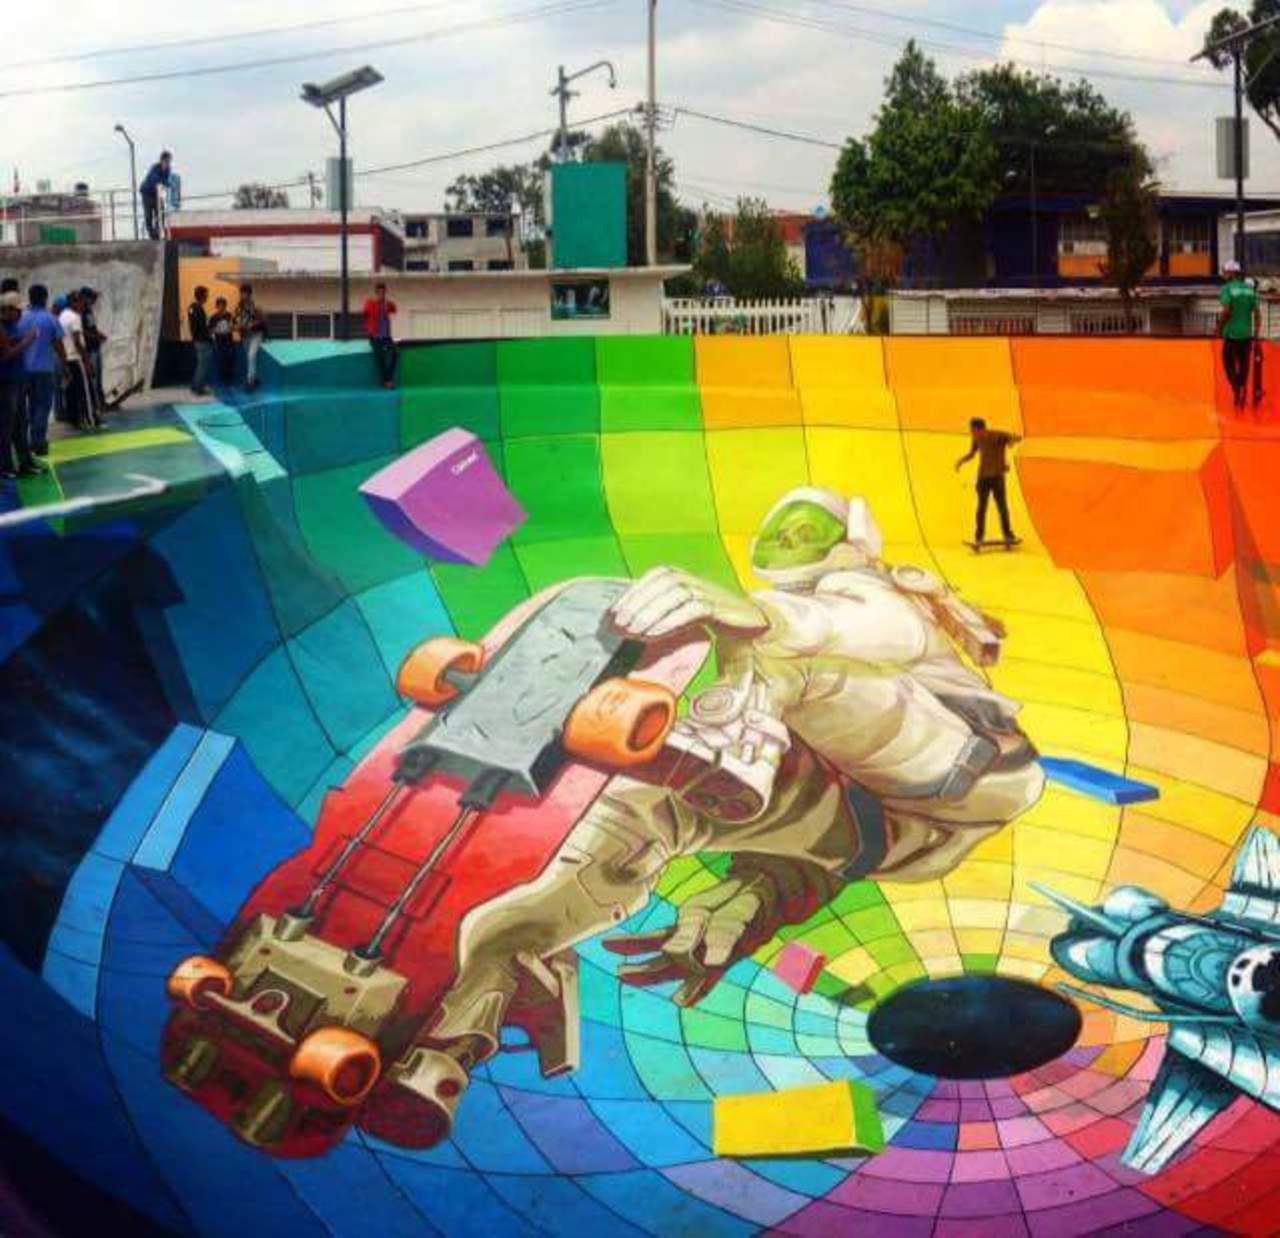 RT @Abbiad86: BESTIAL "skate park"! 
#Graffiti #StreetArt #GraffitiArt http://t.co/4LdTyojTre